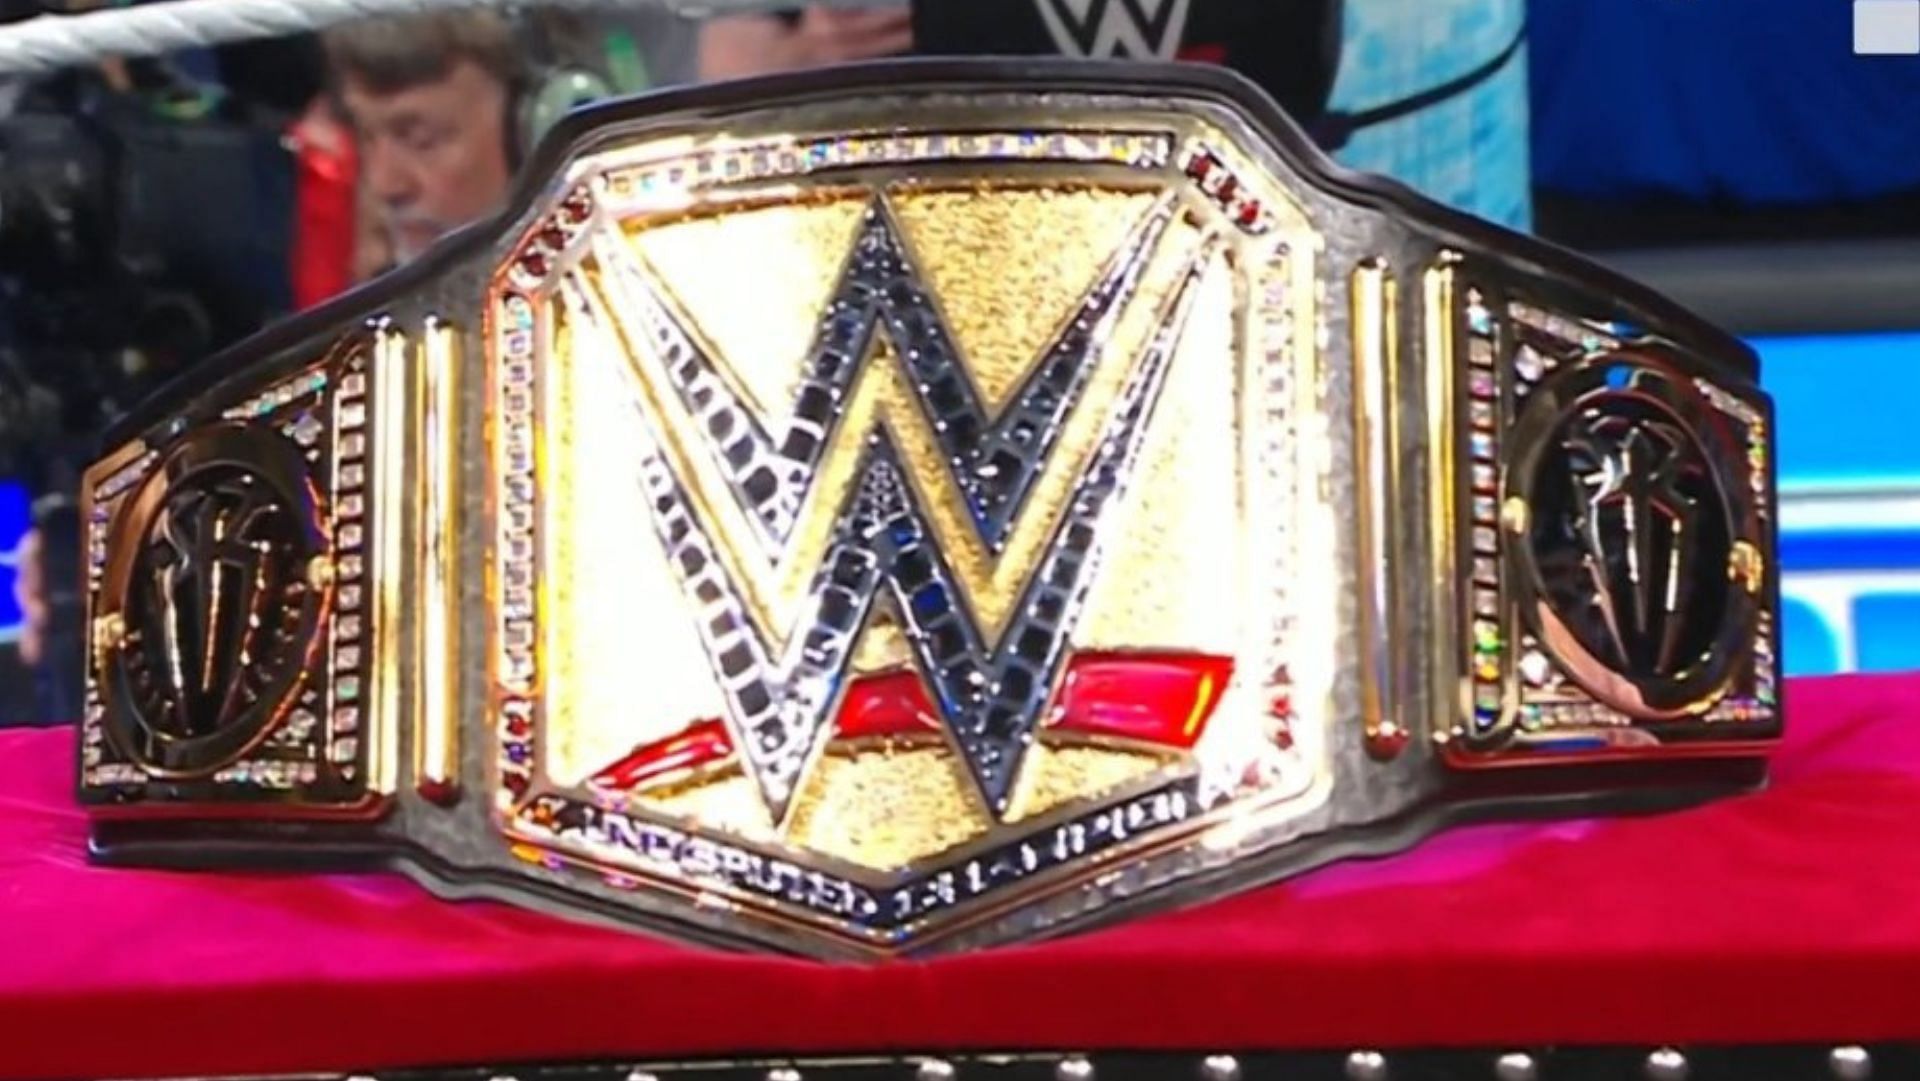 wwe championship belt: 5 times the WWE Championship was modified